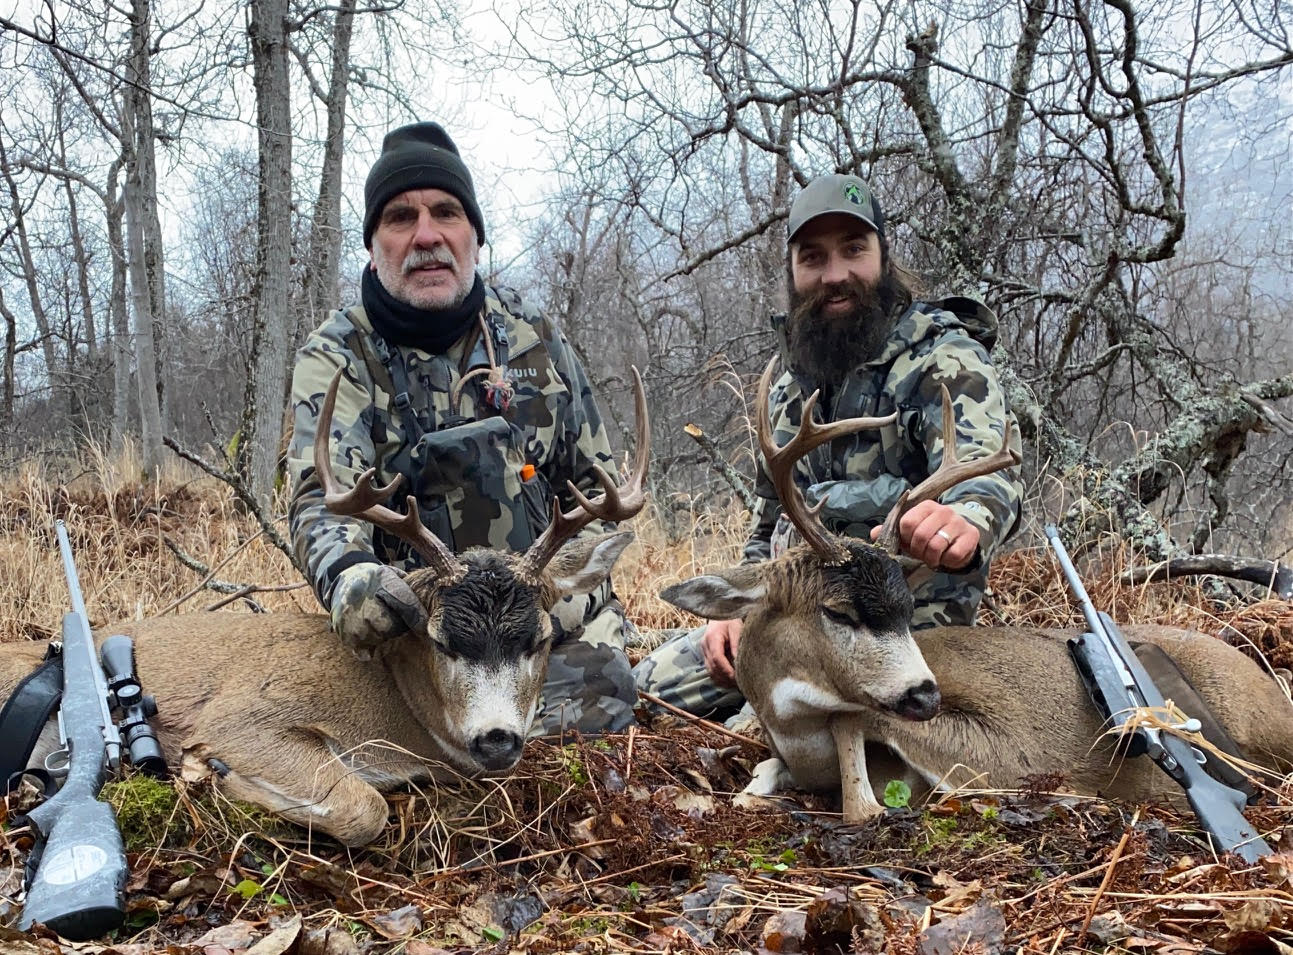 Patrick Kissel and his dad on an Alaska blacktail deer hunt